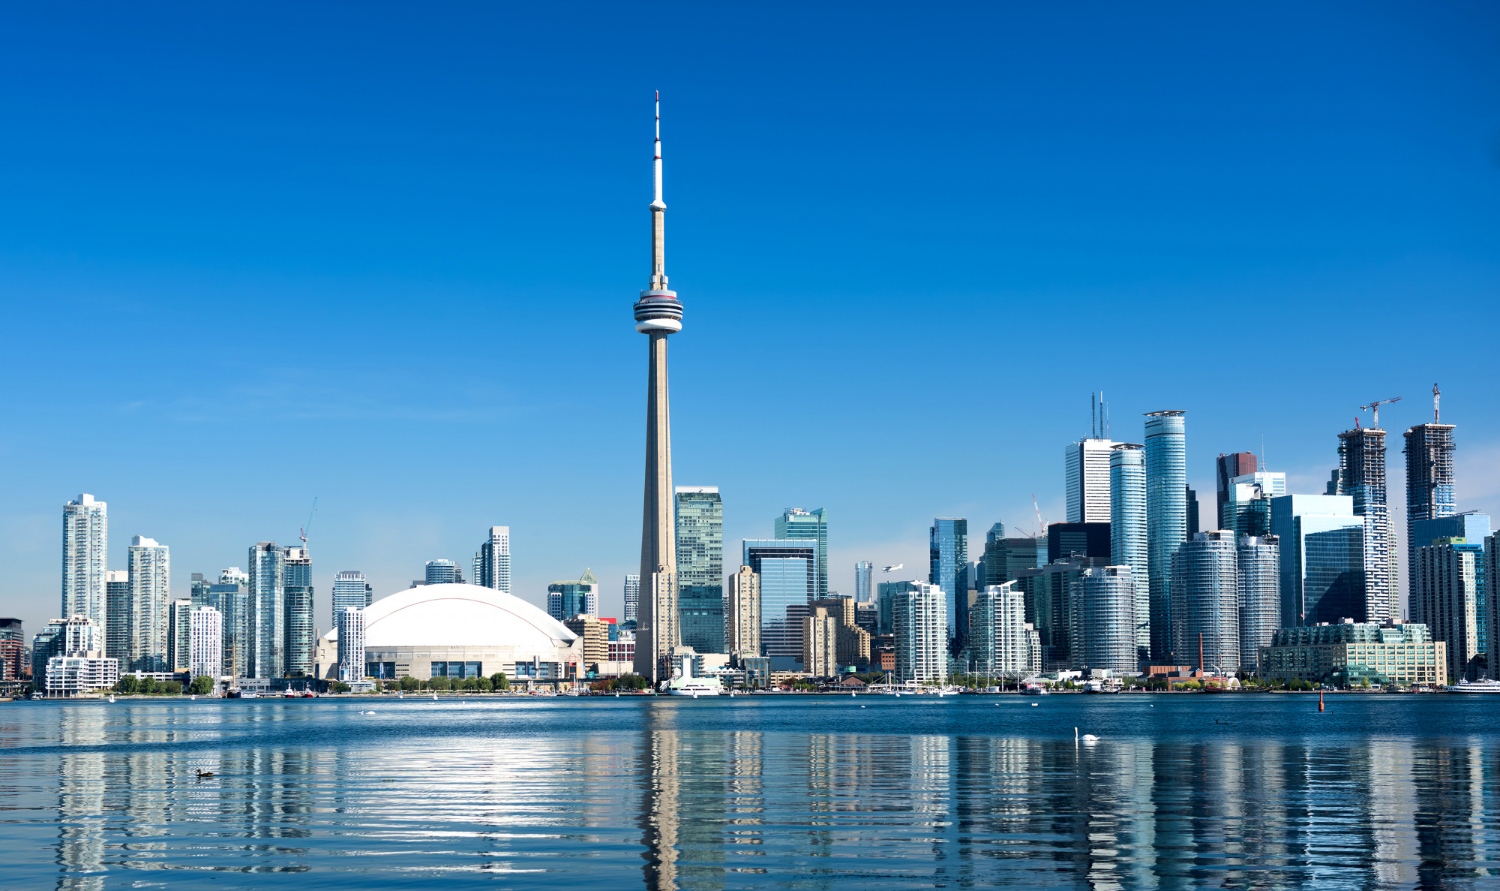 Toronto flights - Book your flights to Toronto now!